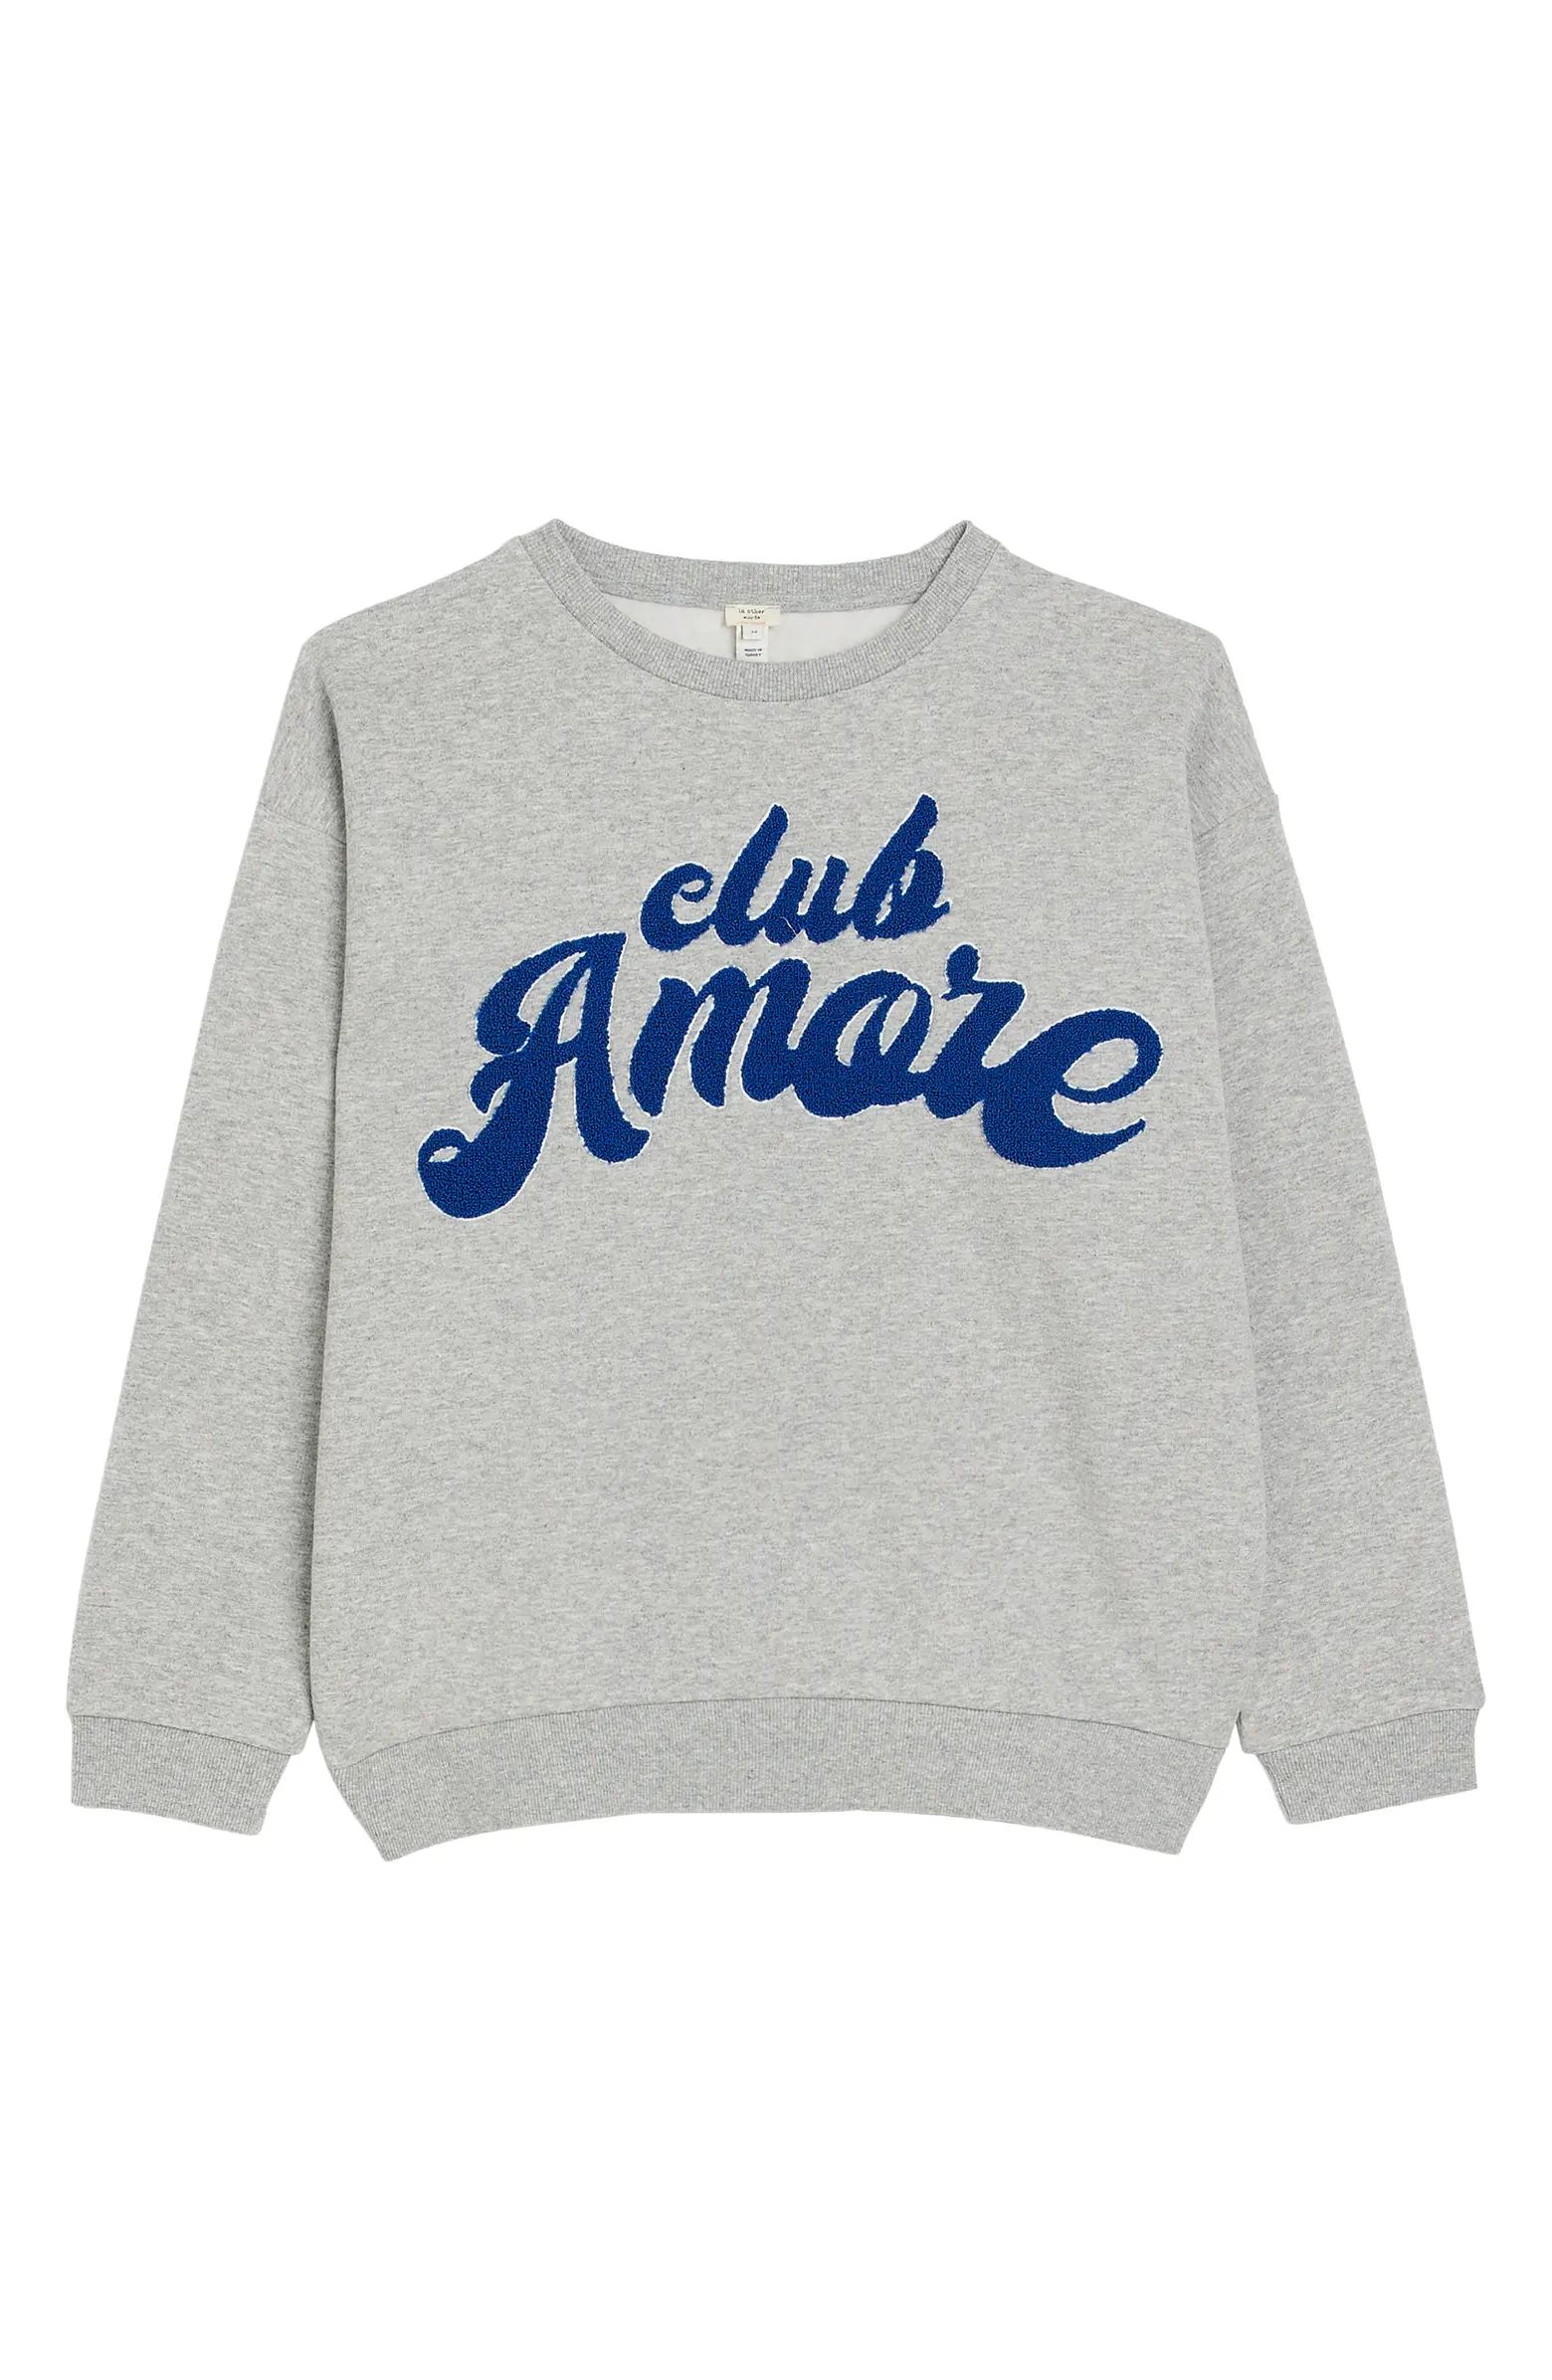 Club Amore Sweatshirt | Nordstrom